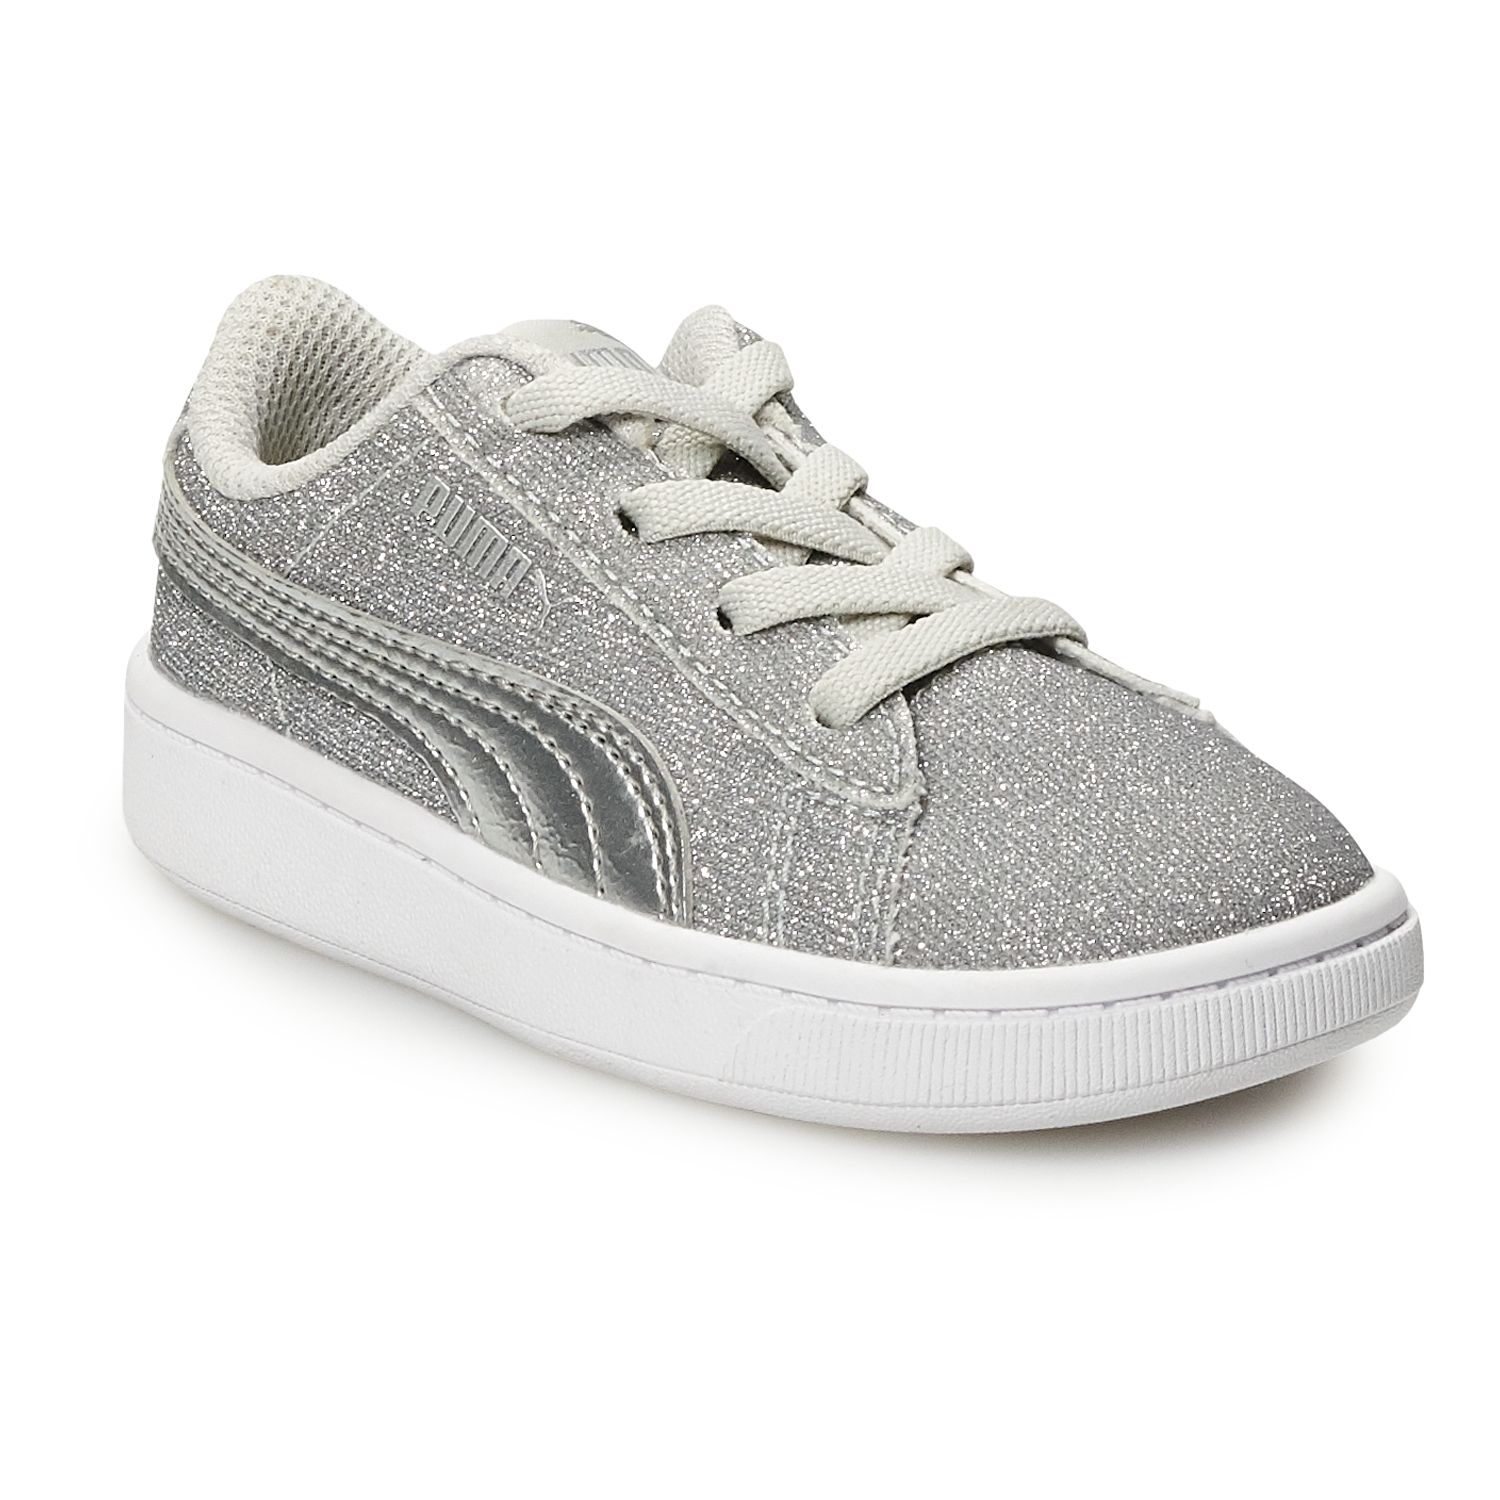 puma shoes for kids girls